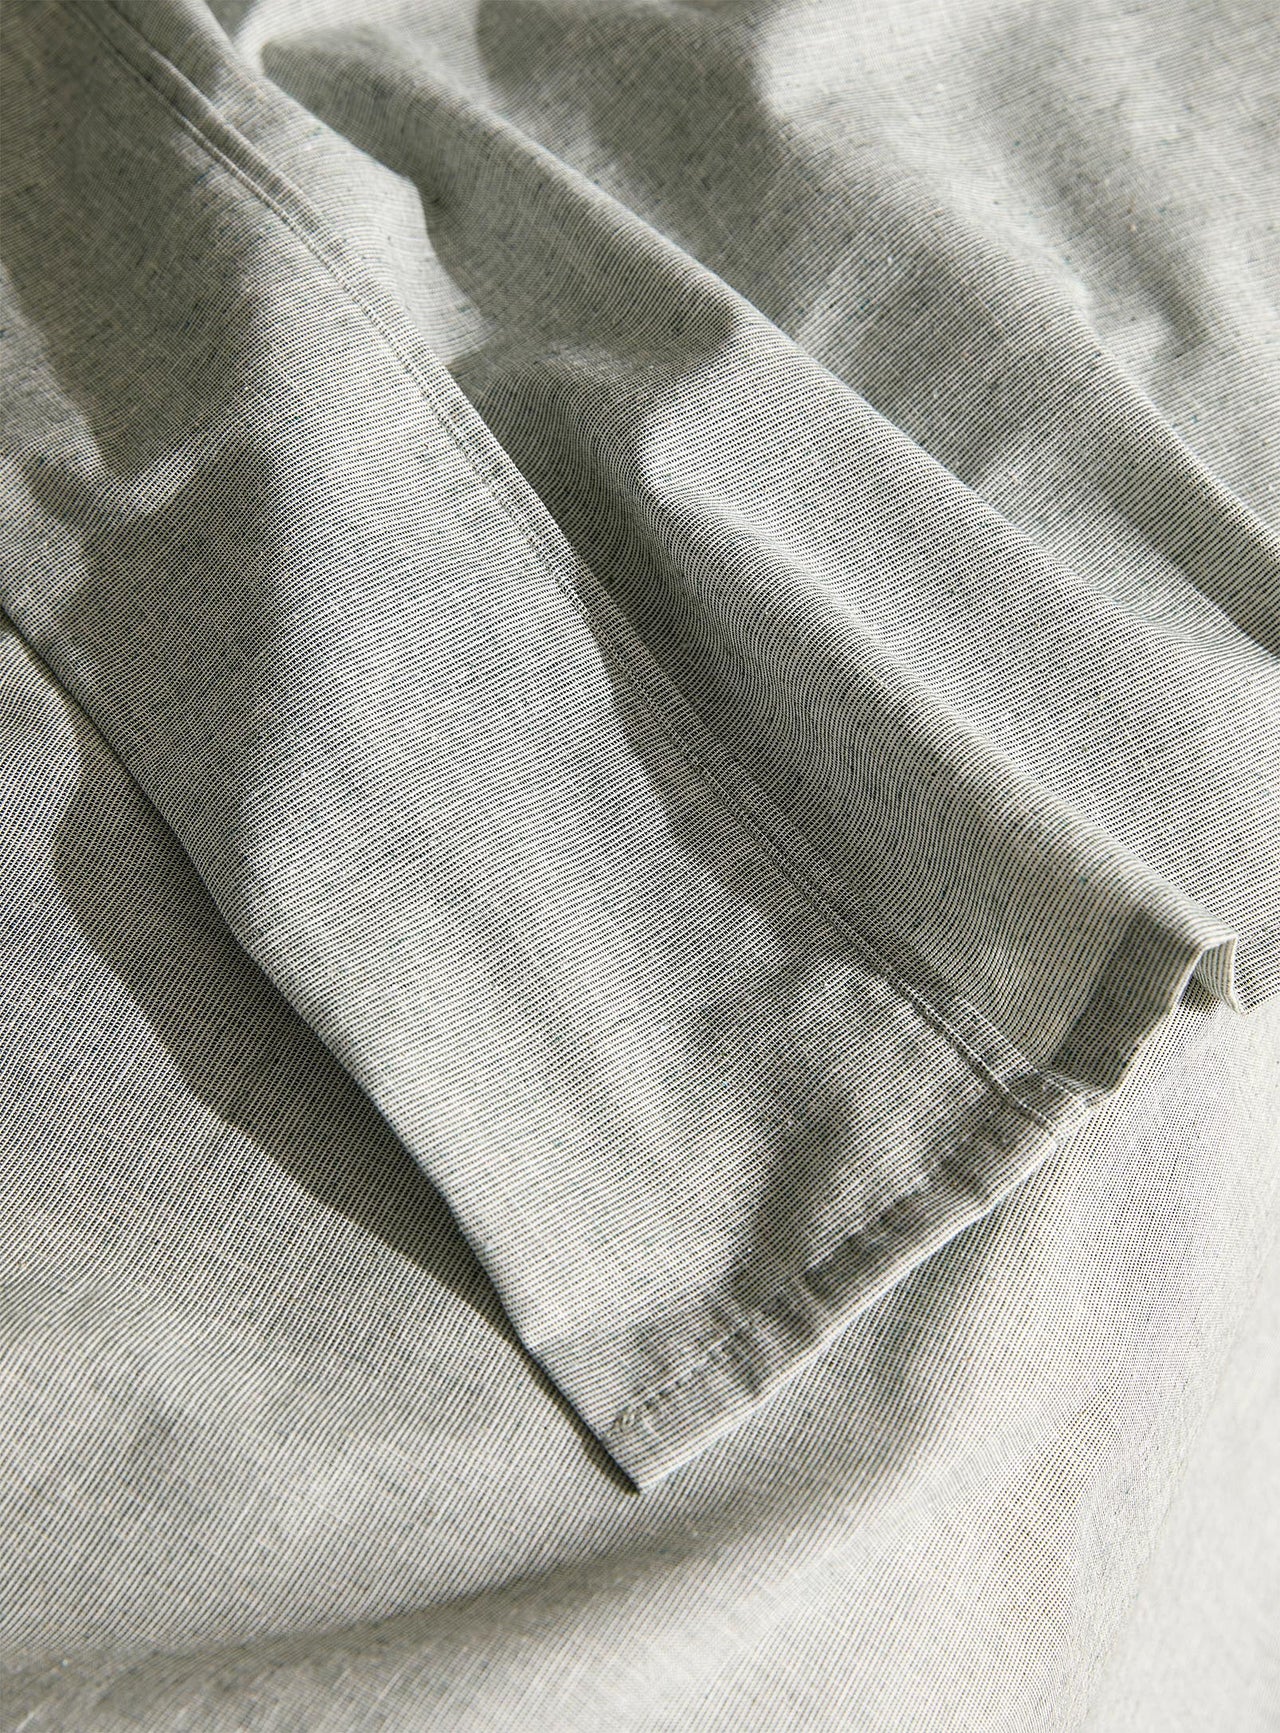 End-on-end cotton sheet set